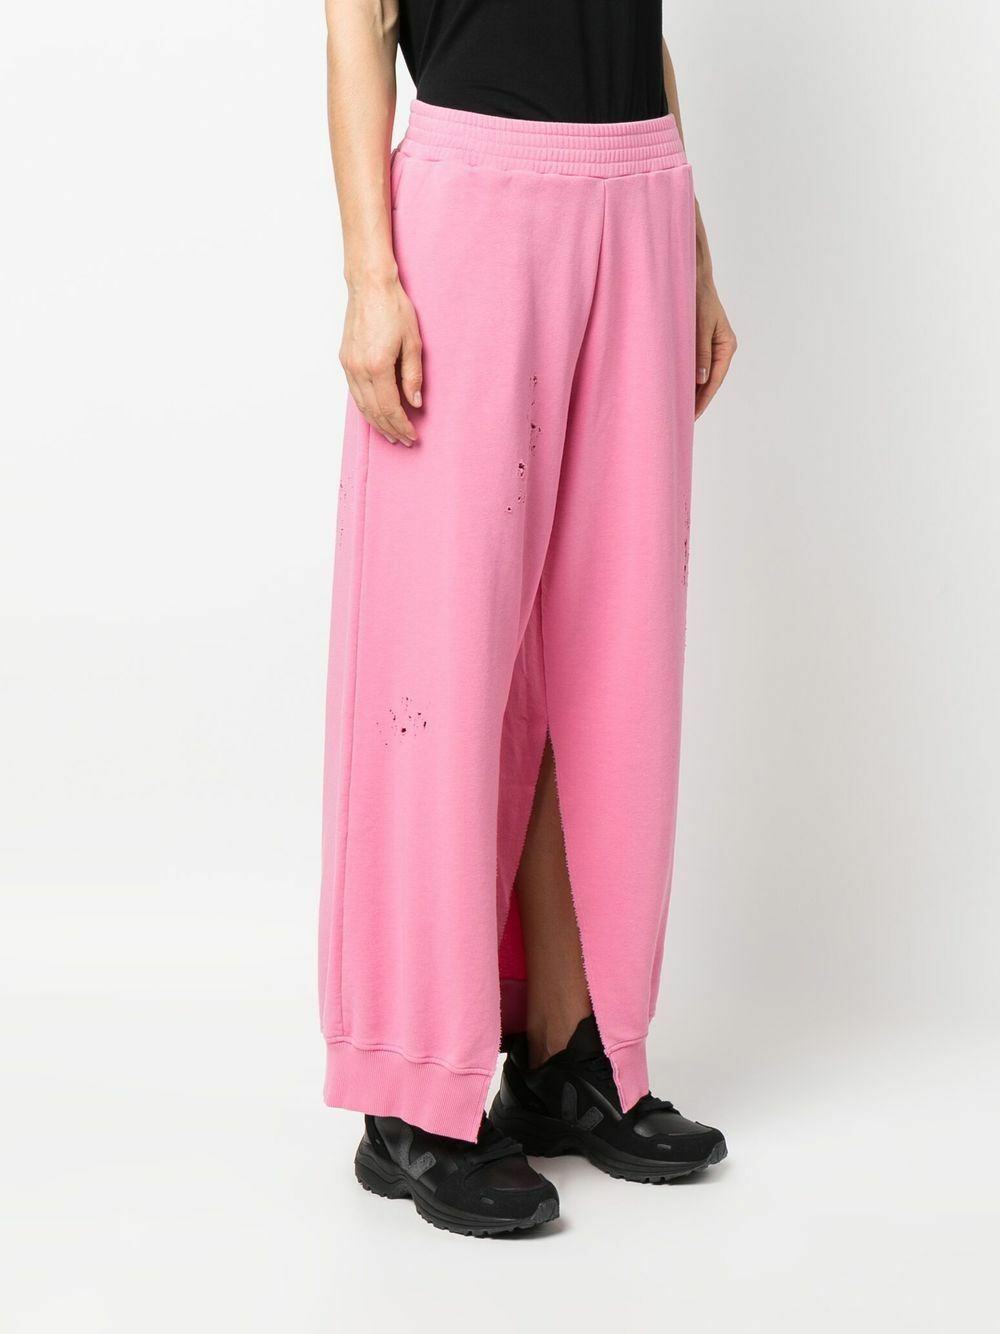 Mm6 Ladies Pink Split Detail Track Pants, Size X-Small